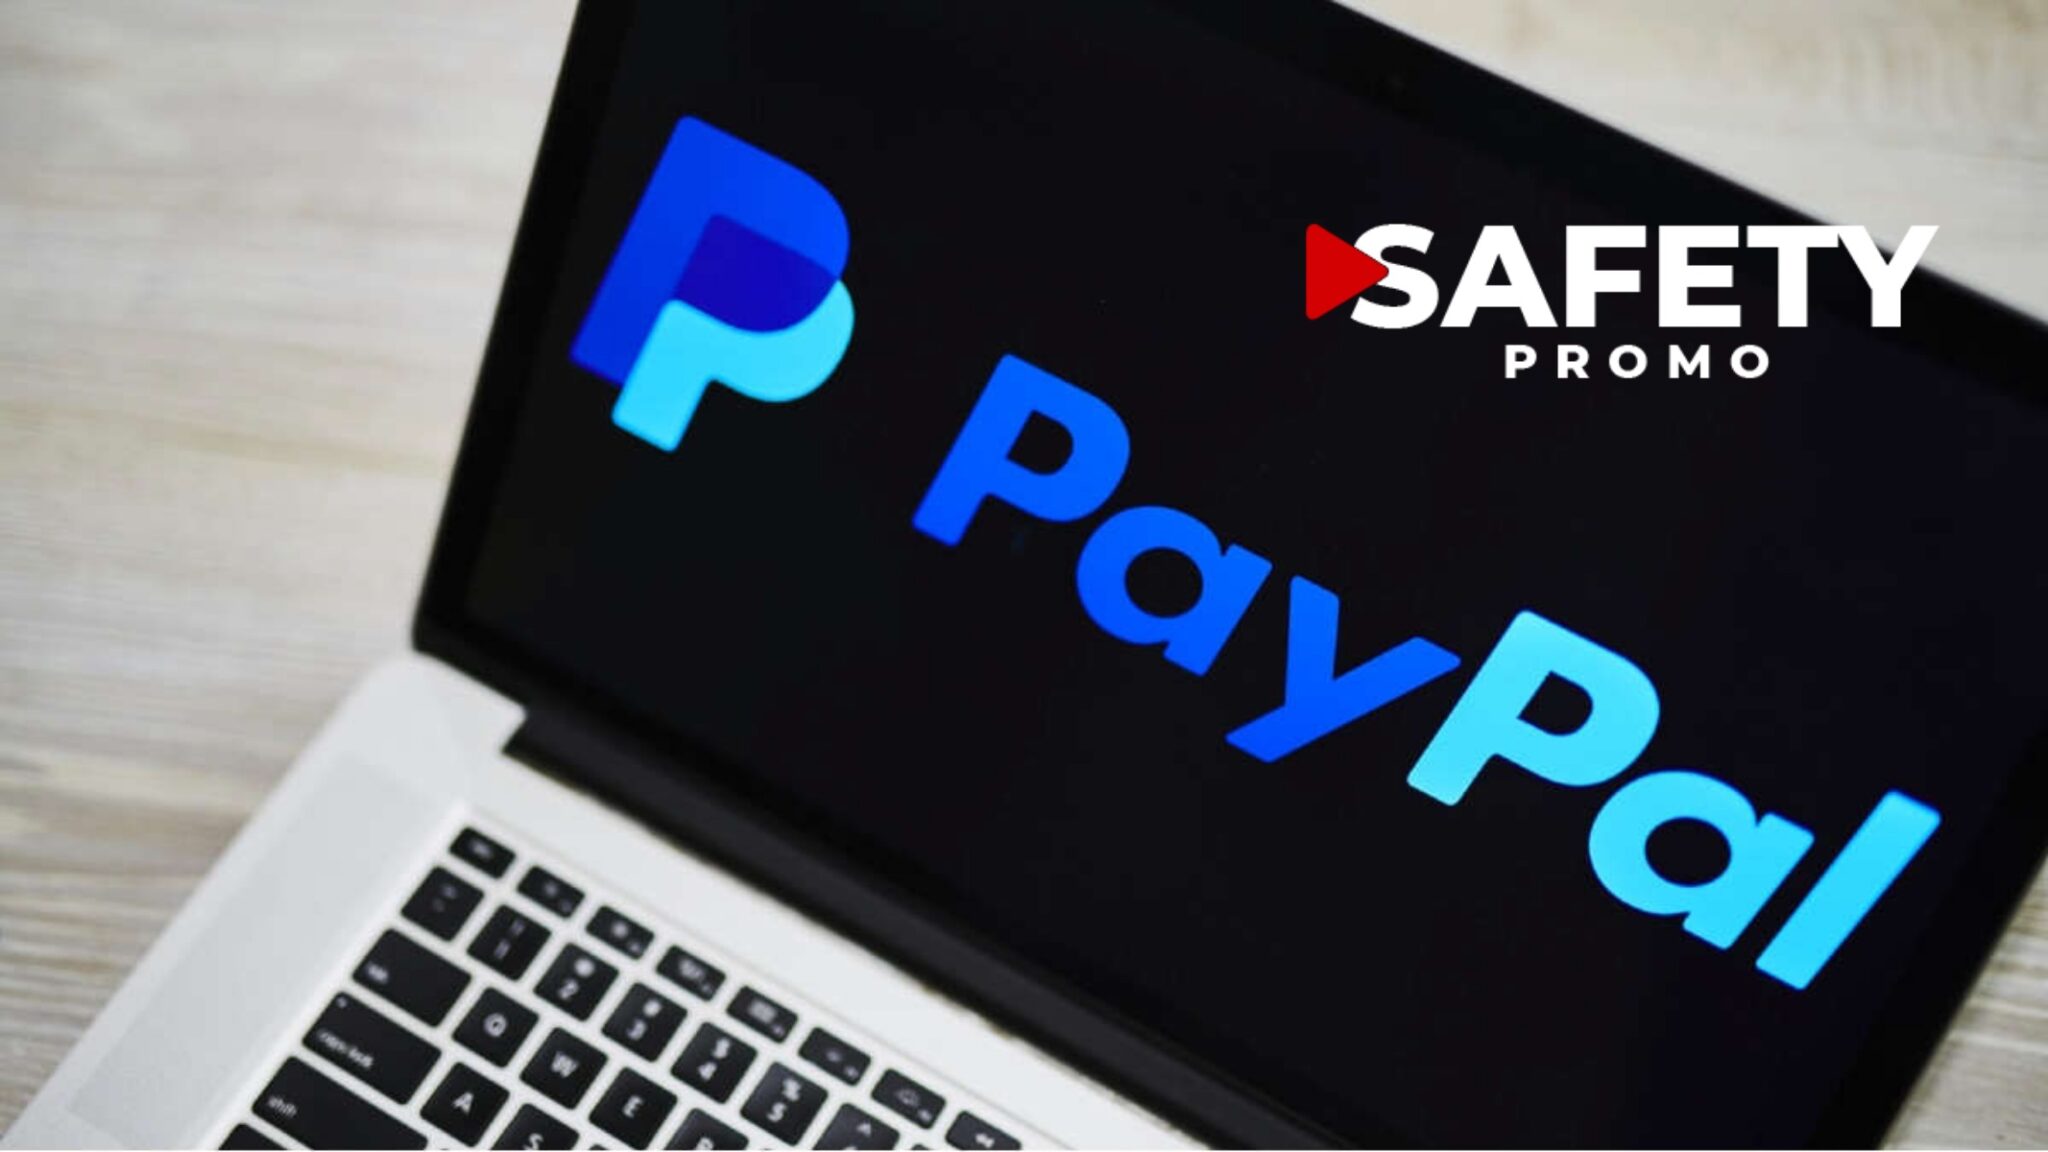 PayPal envisage de créer sa propre cryptomonnaie